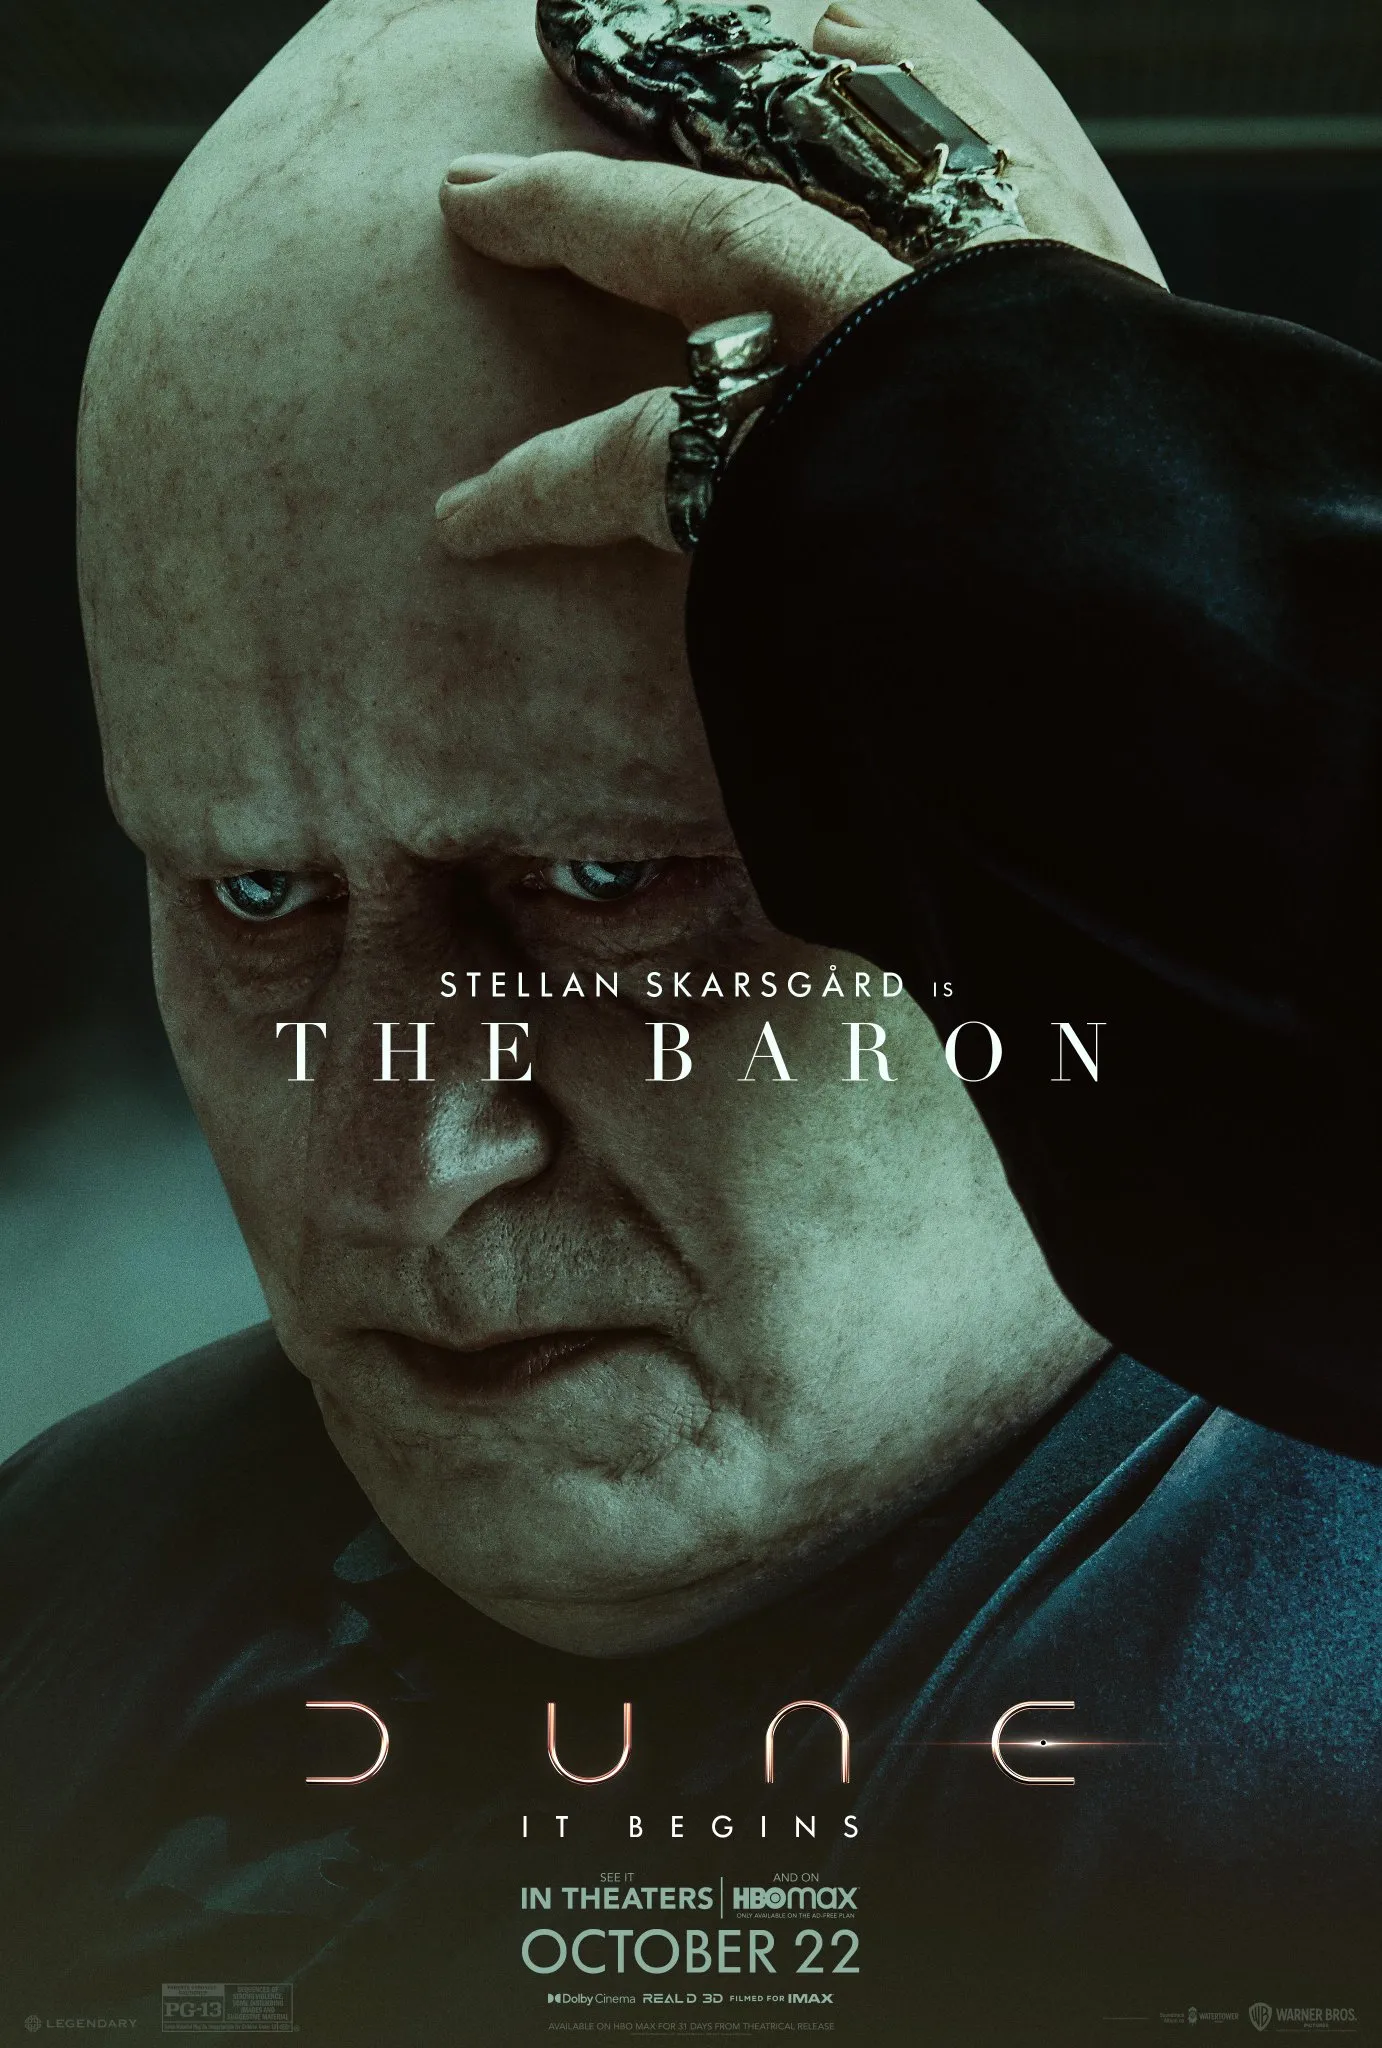 Stellan Skarsgard is The Baron